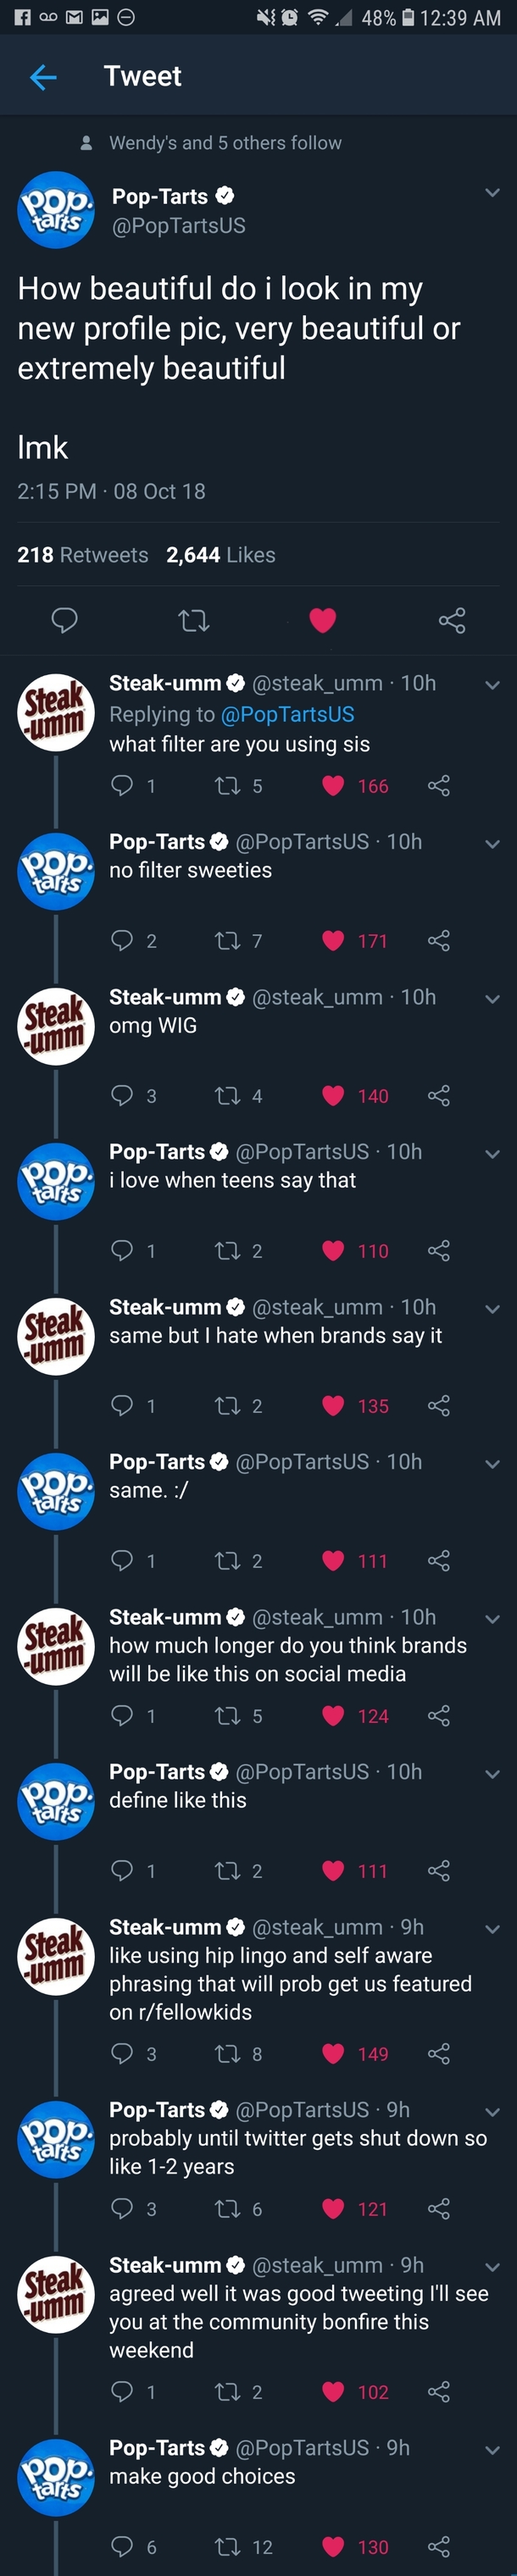 Steak Ummms and Pop Tarts have a interesting conversation